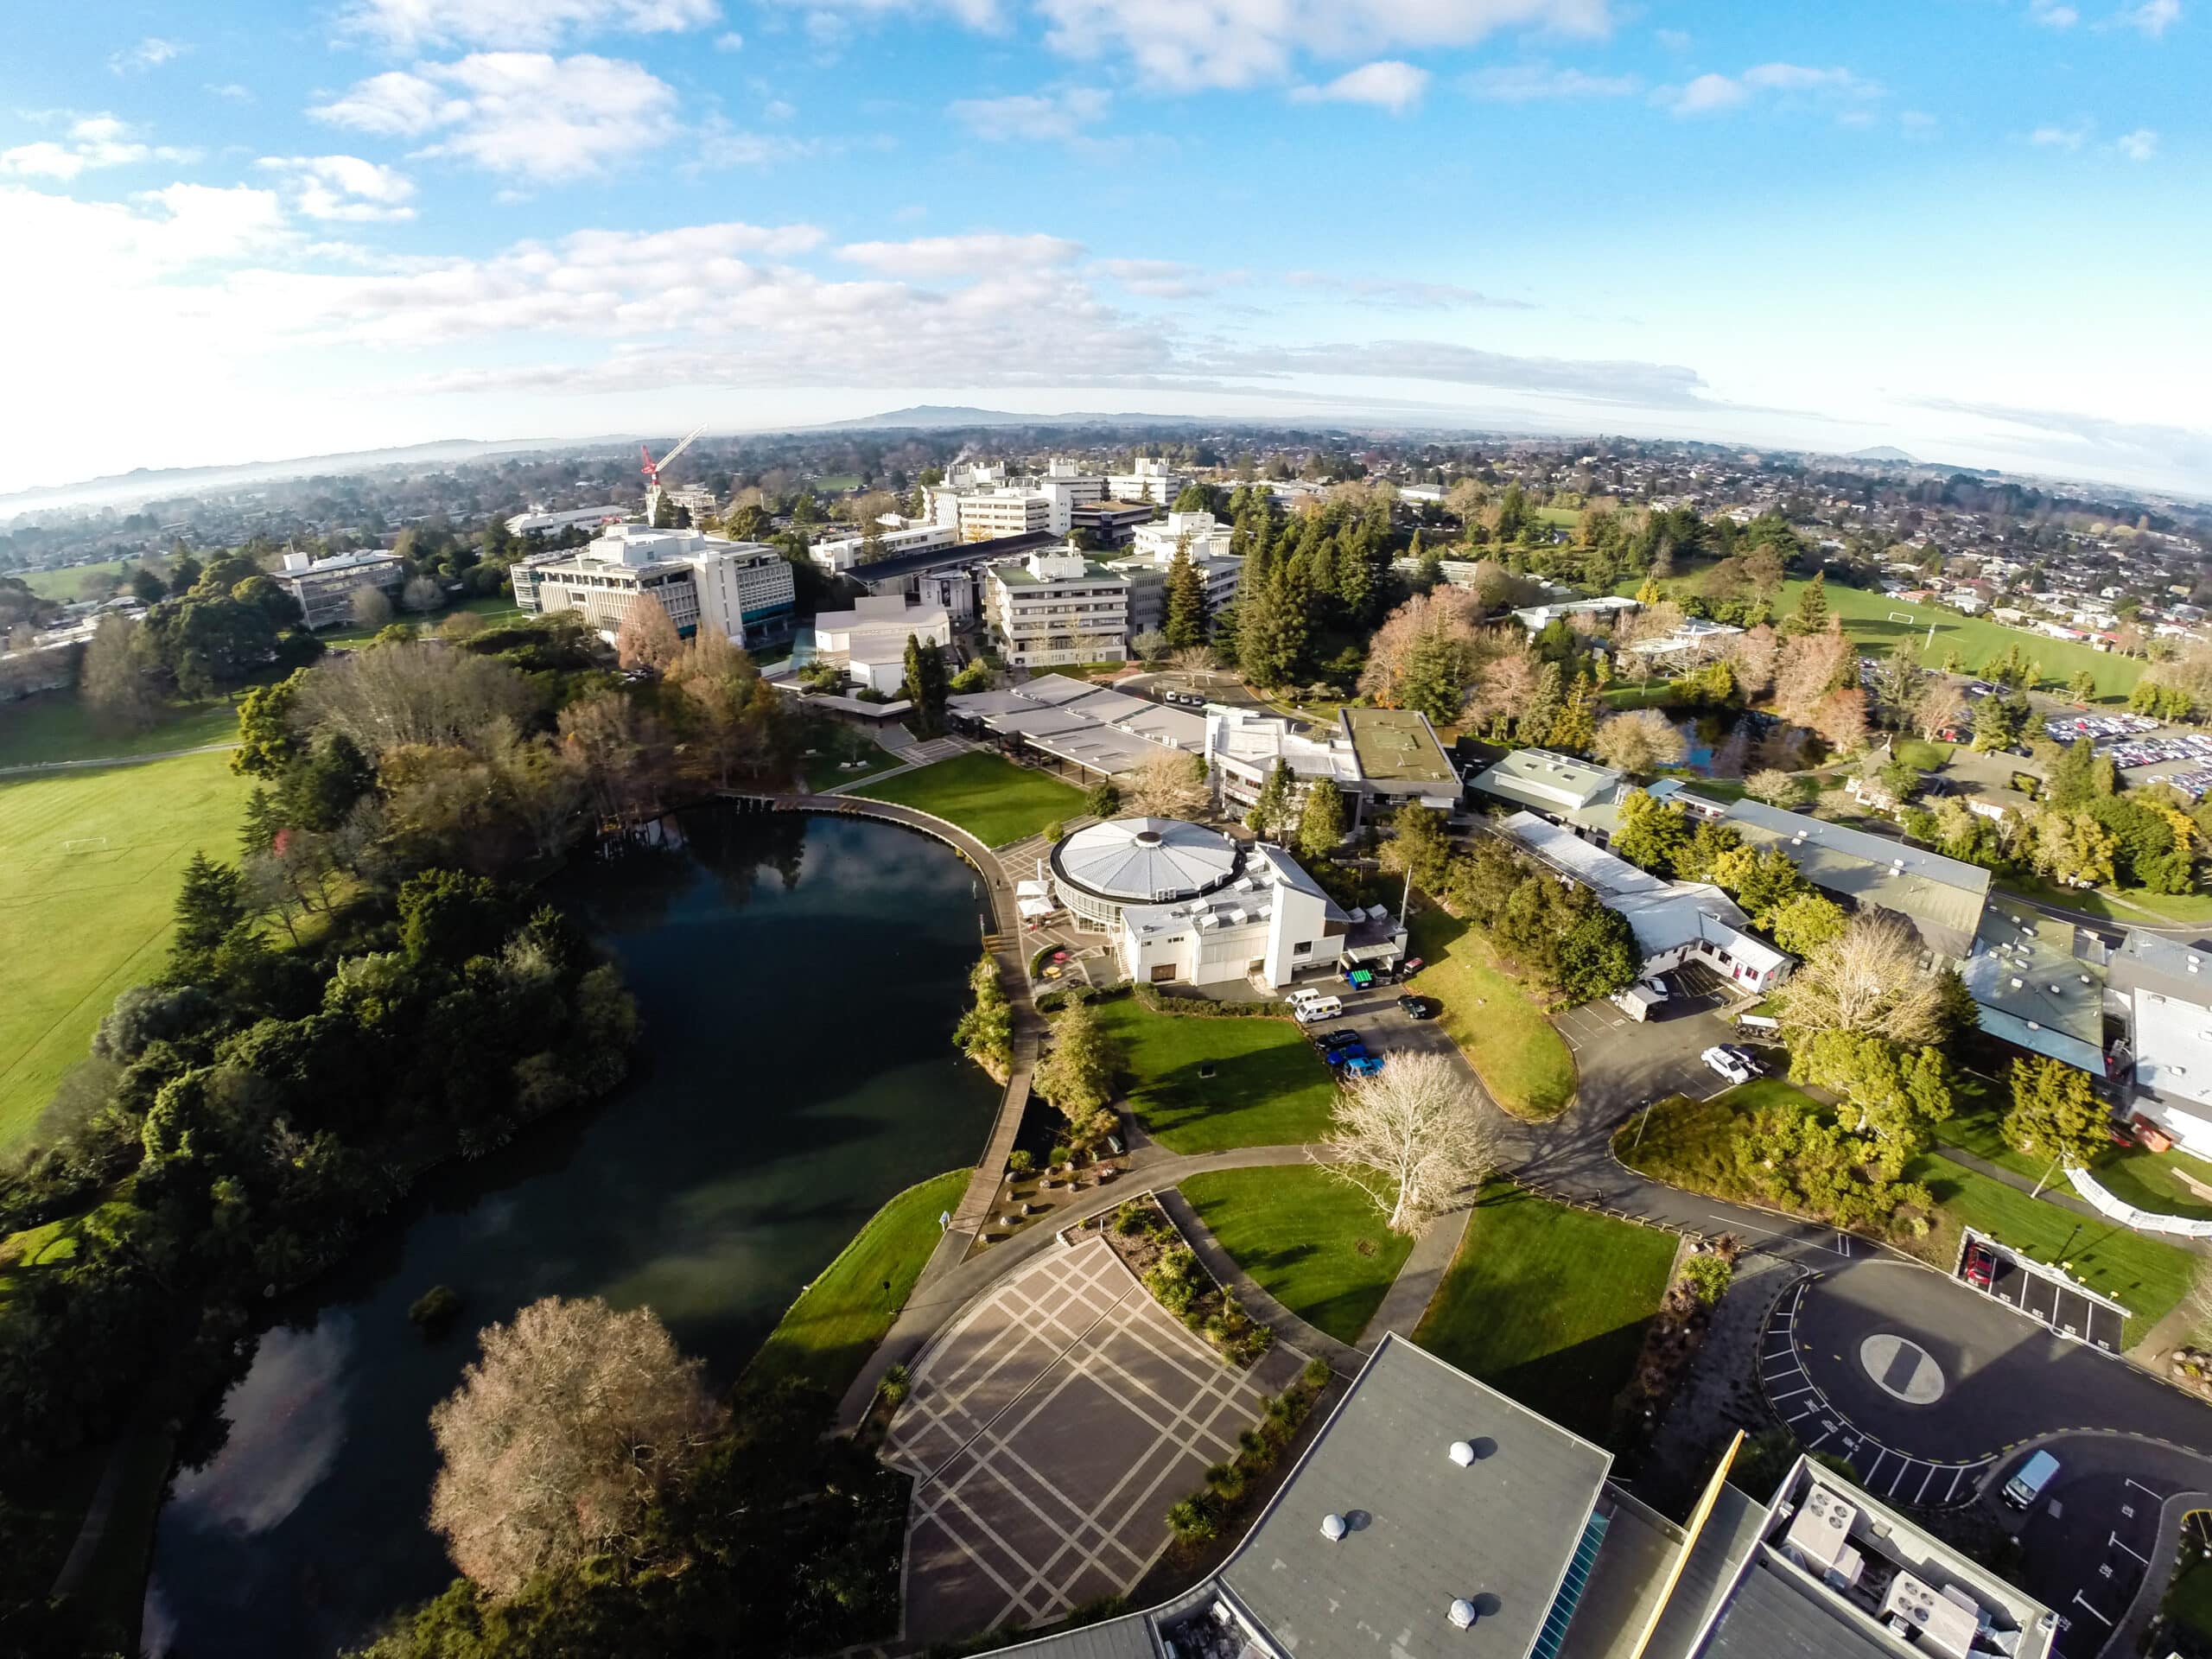 University of Waikato College: Paving the way to postgraduate success